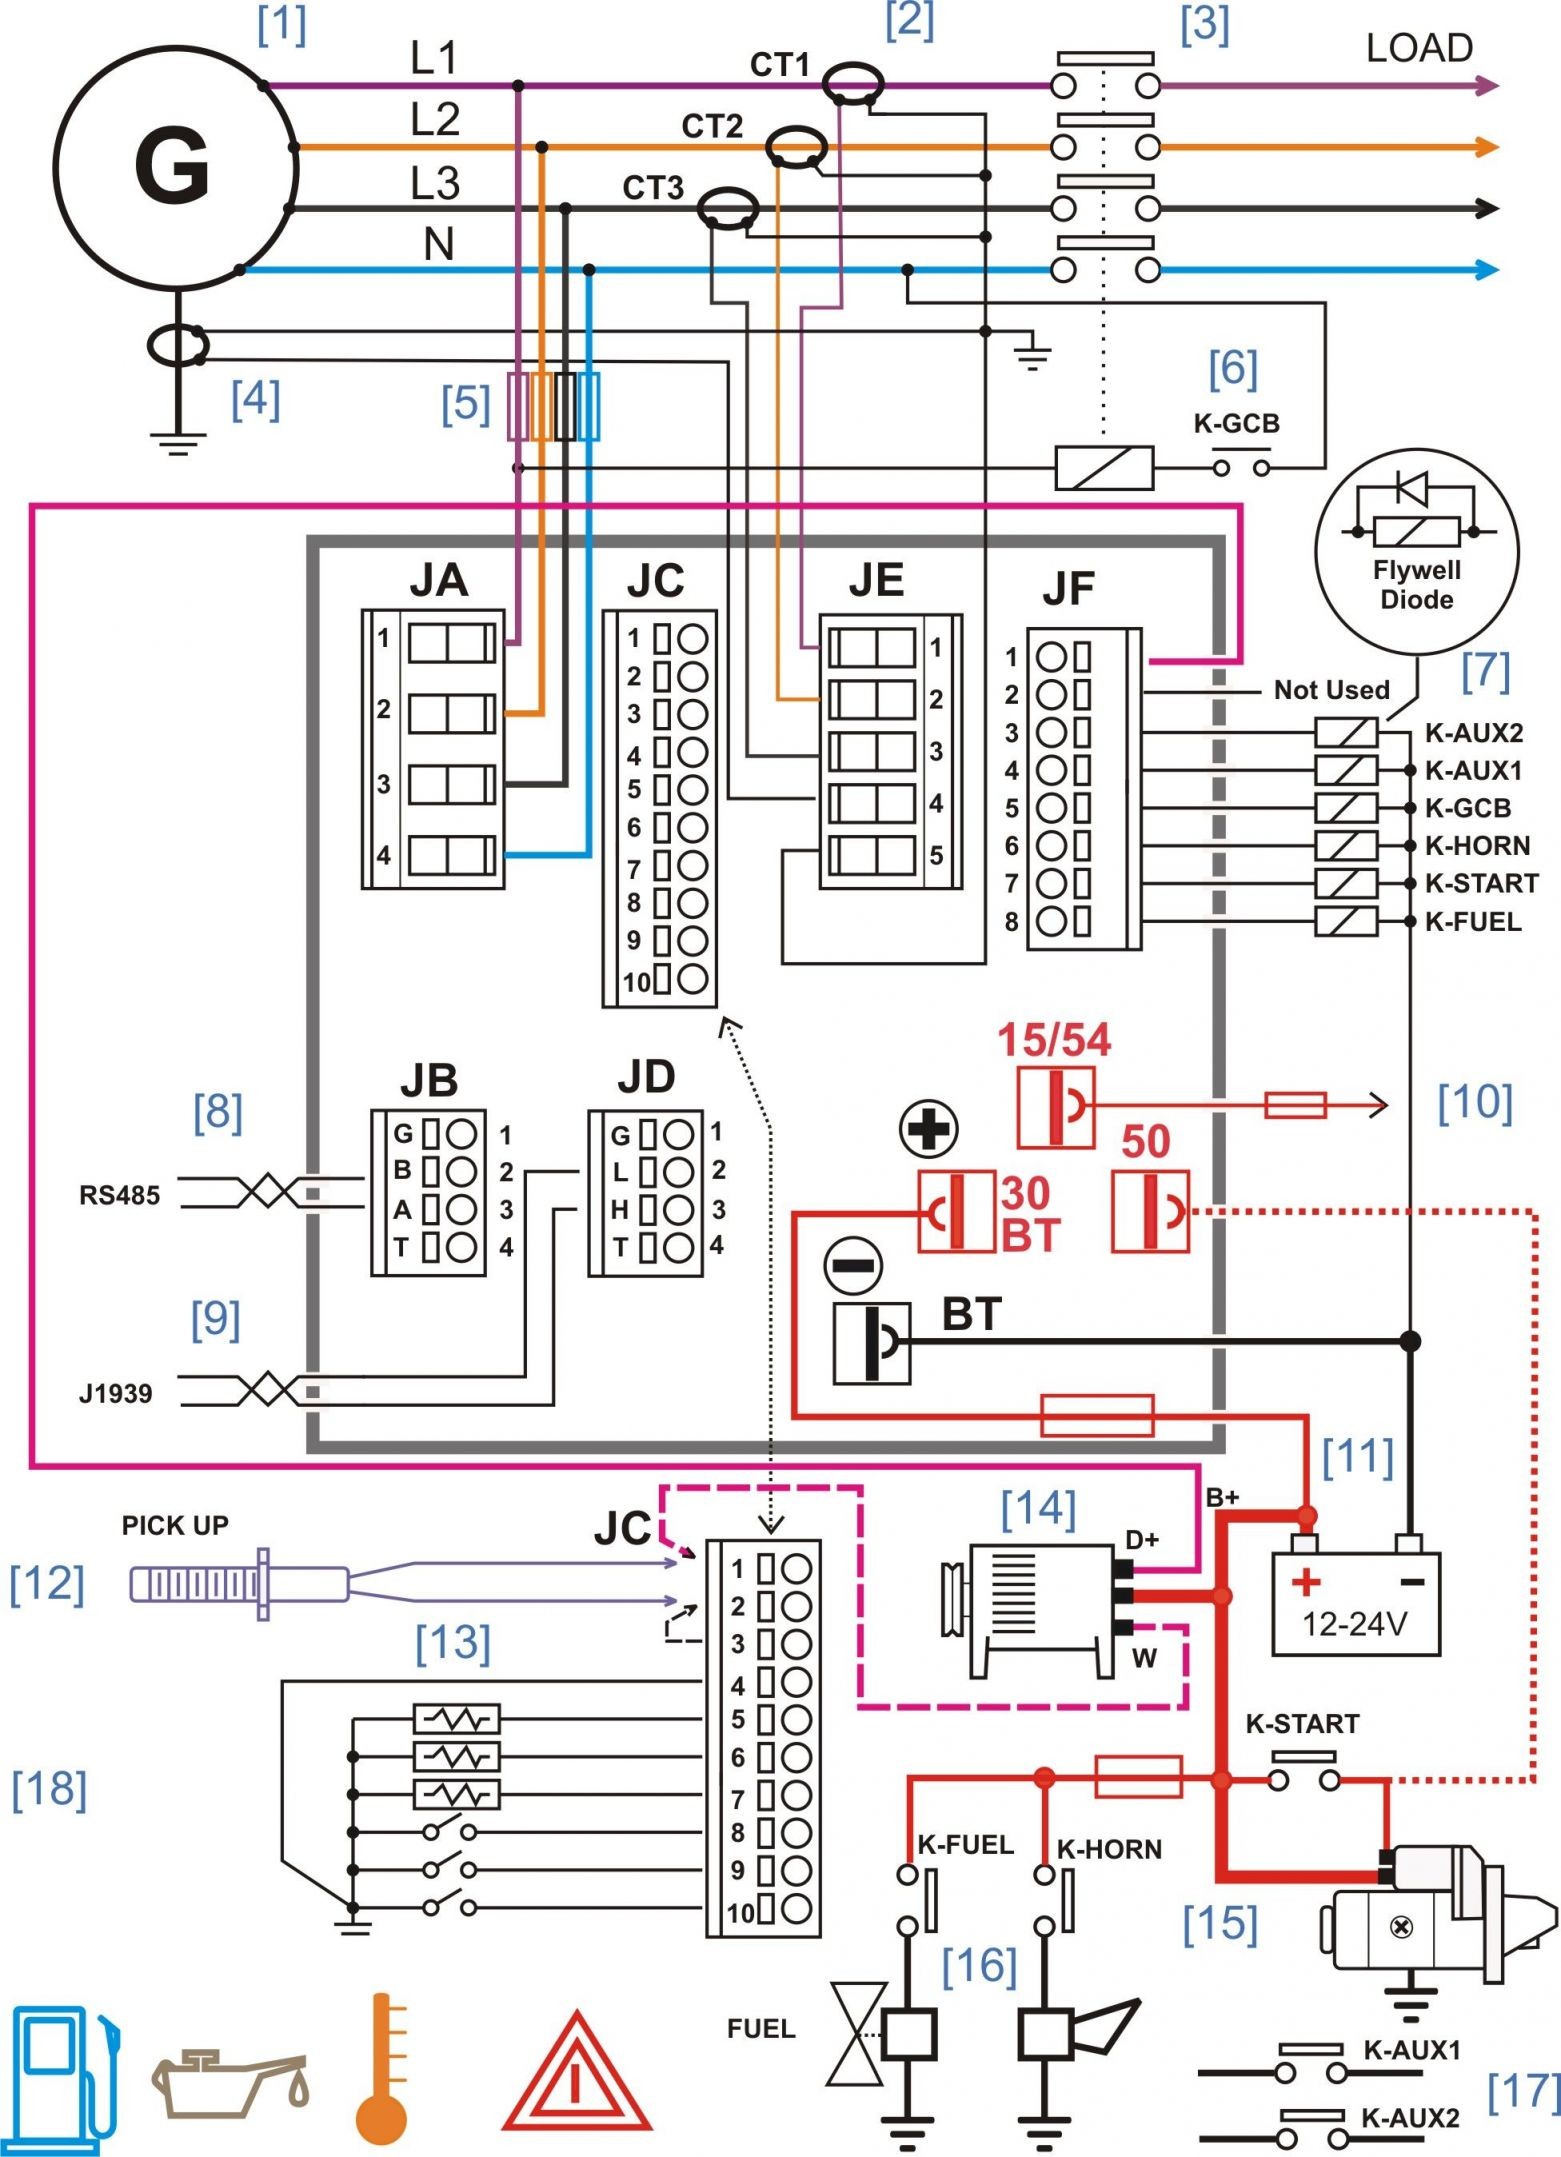 Super Diesel Generator Control Panel Wiring Diagram Electrical House Wiring Estimate Pdf rp9